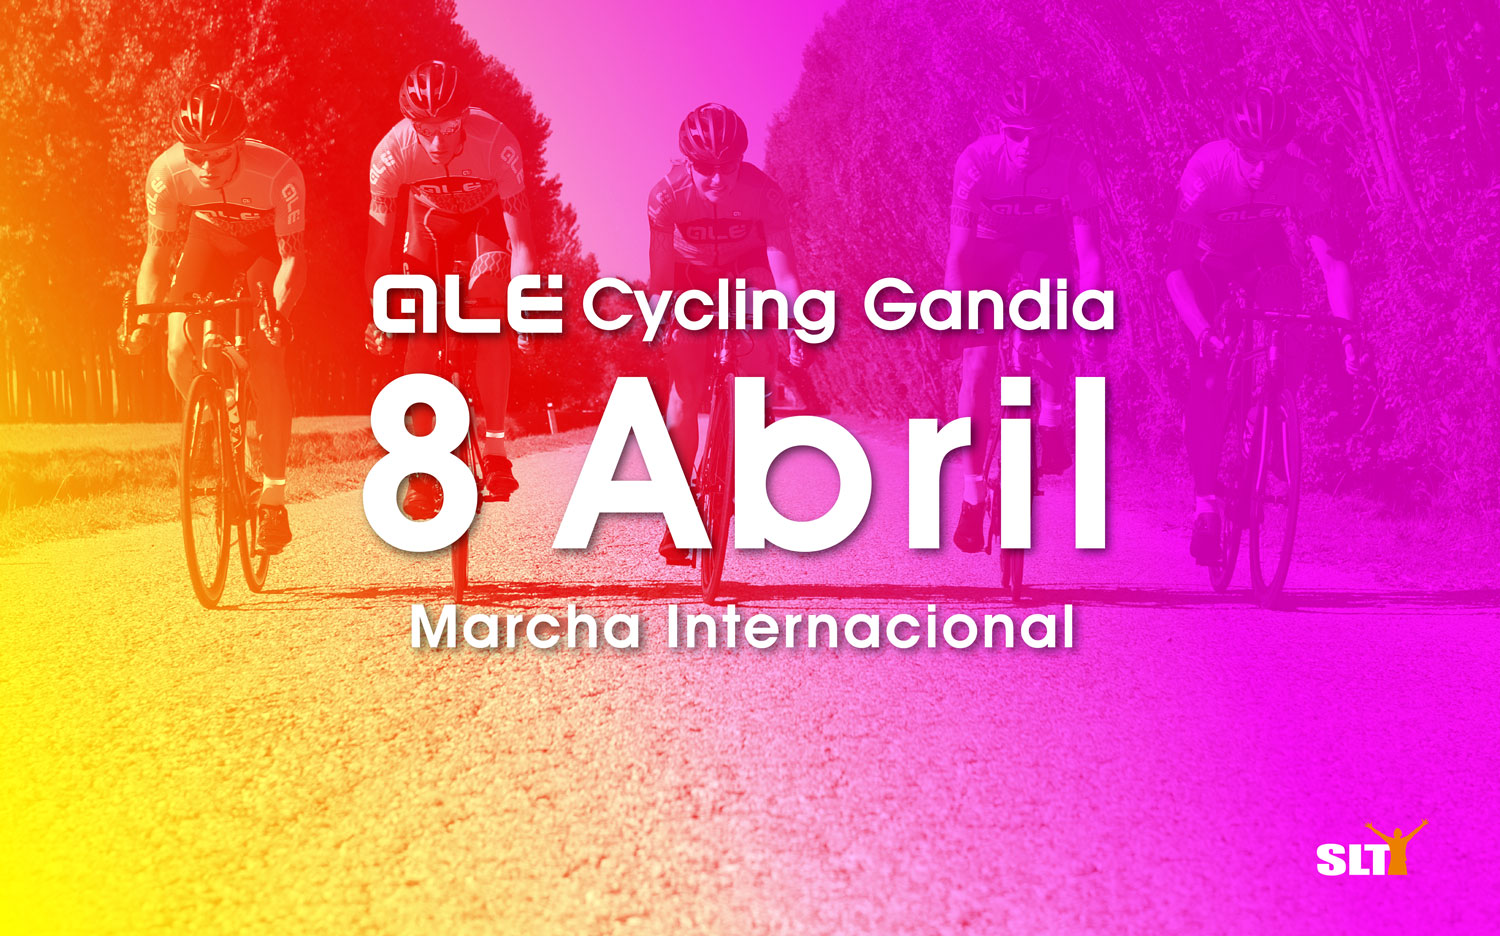 II ALE Cycling Gandia - Marcha Internacional